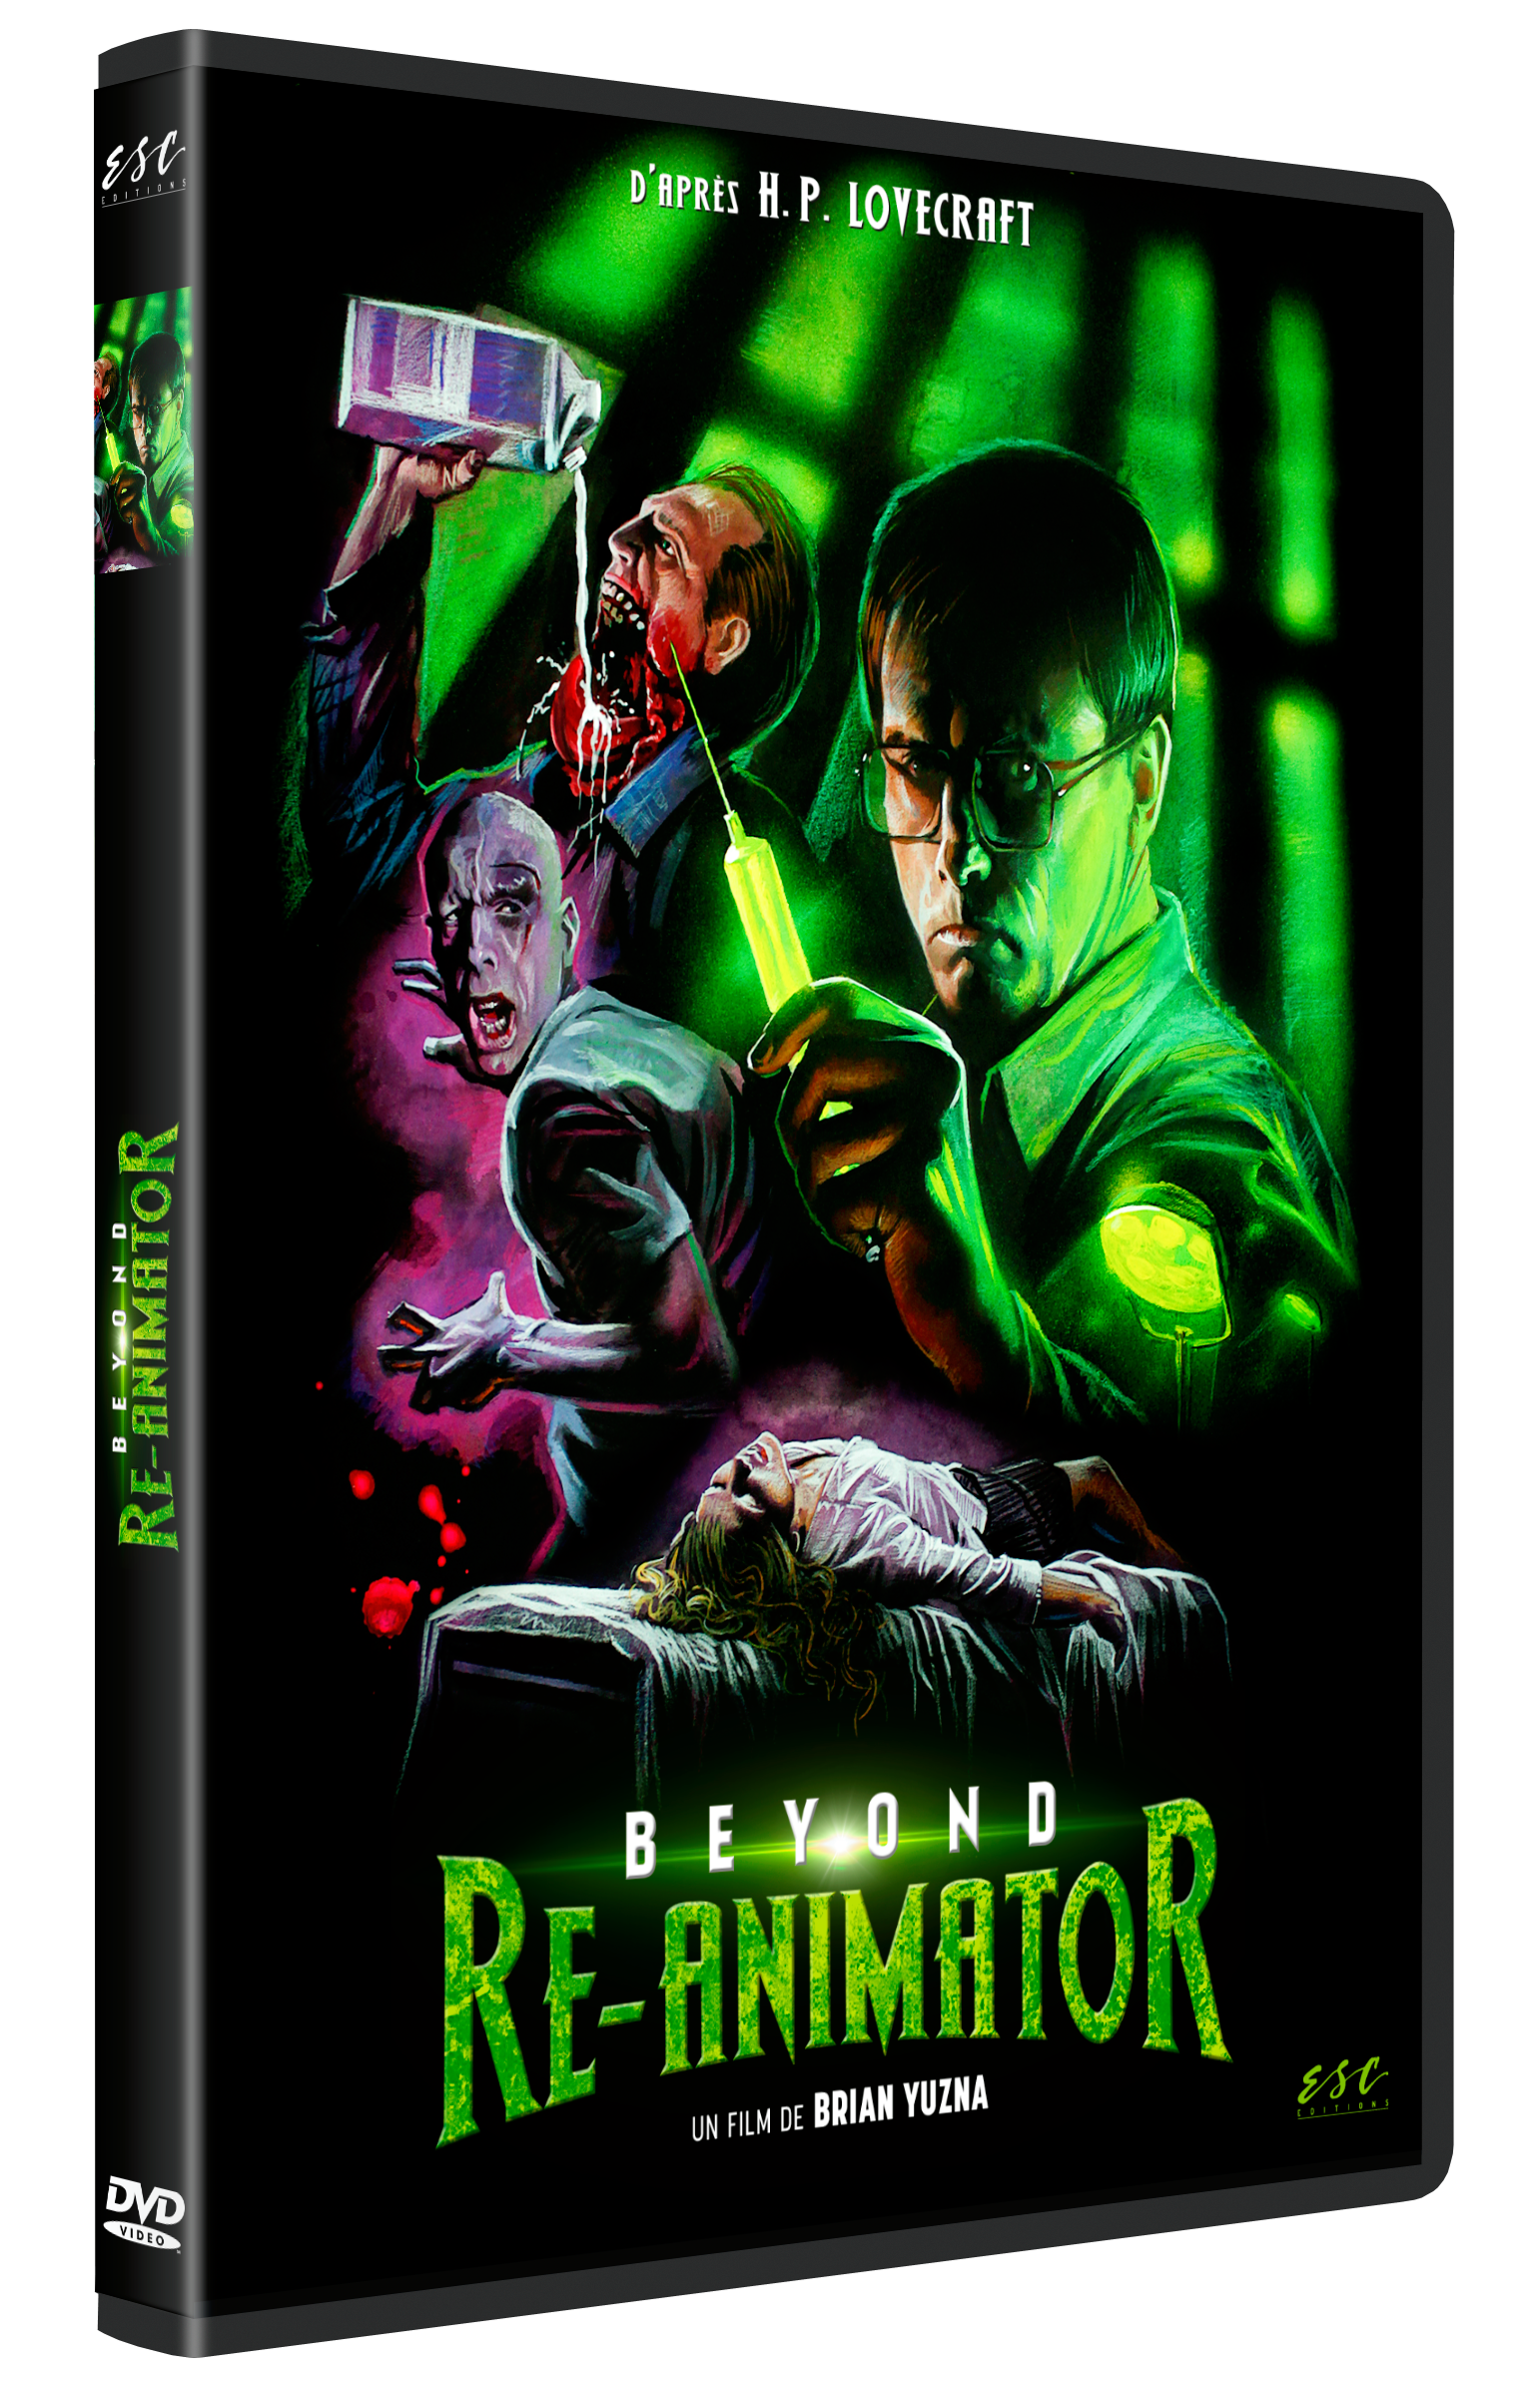 BEYOND REANIMATOR - DVD